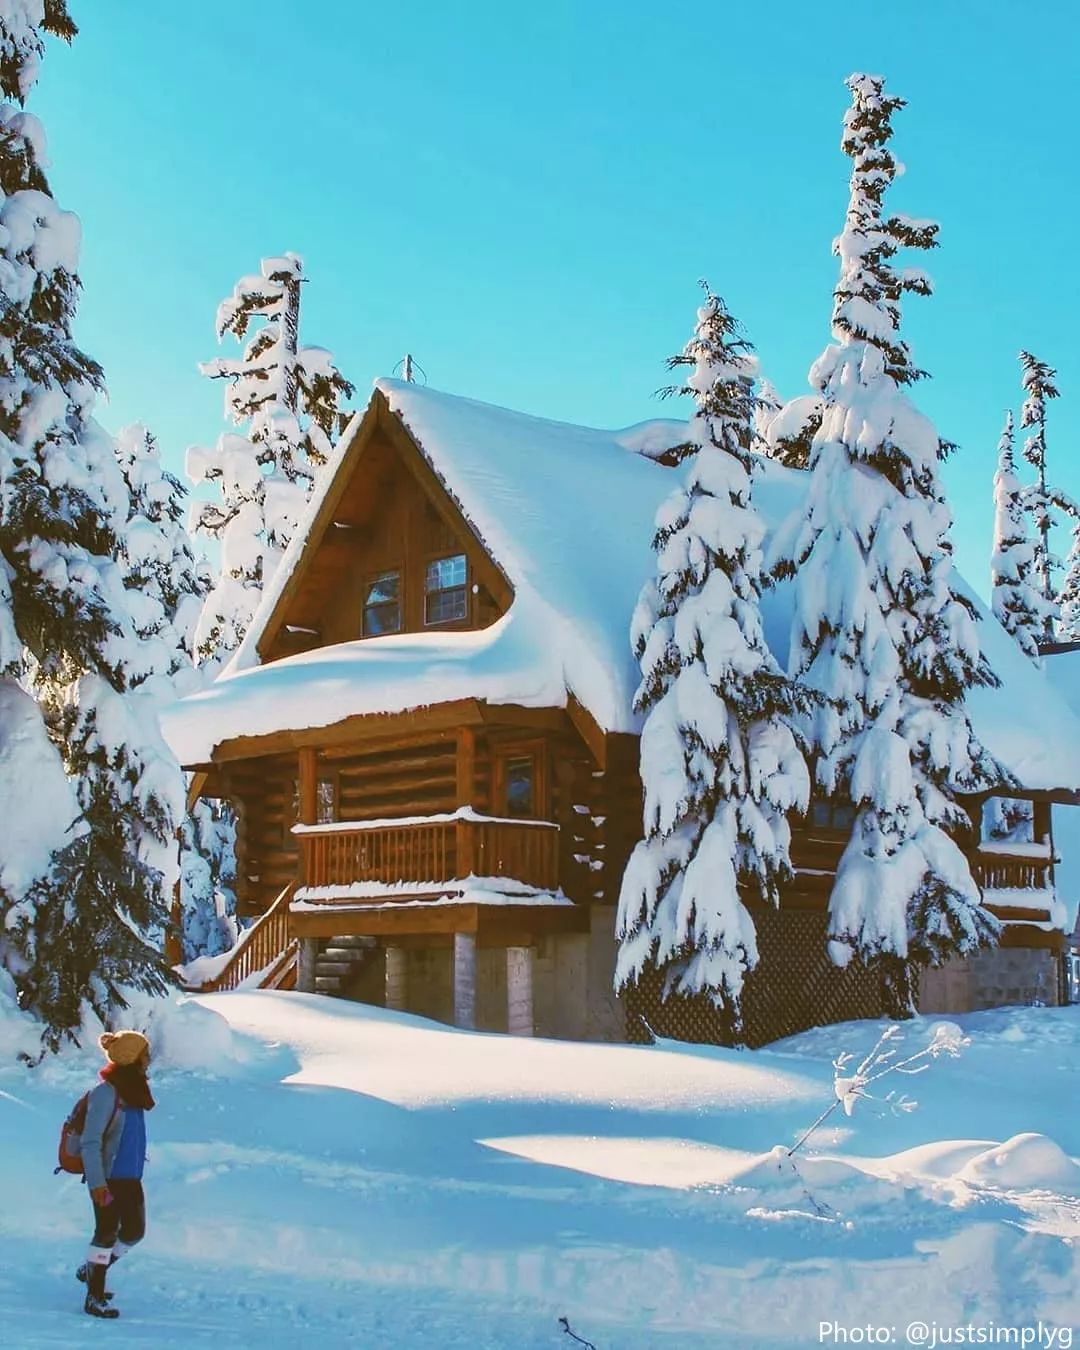 Winter Mountain Cabin Wallpapers - Top Free Winter Mountain Cabin ...